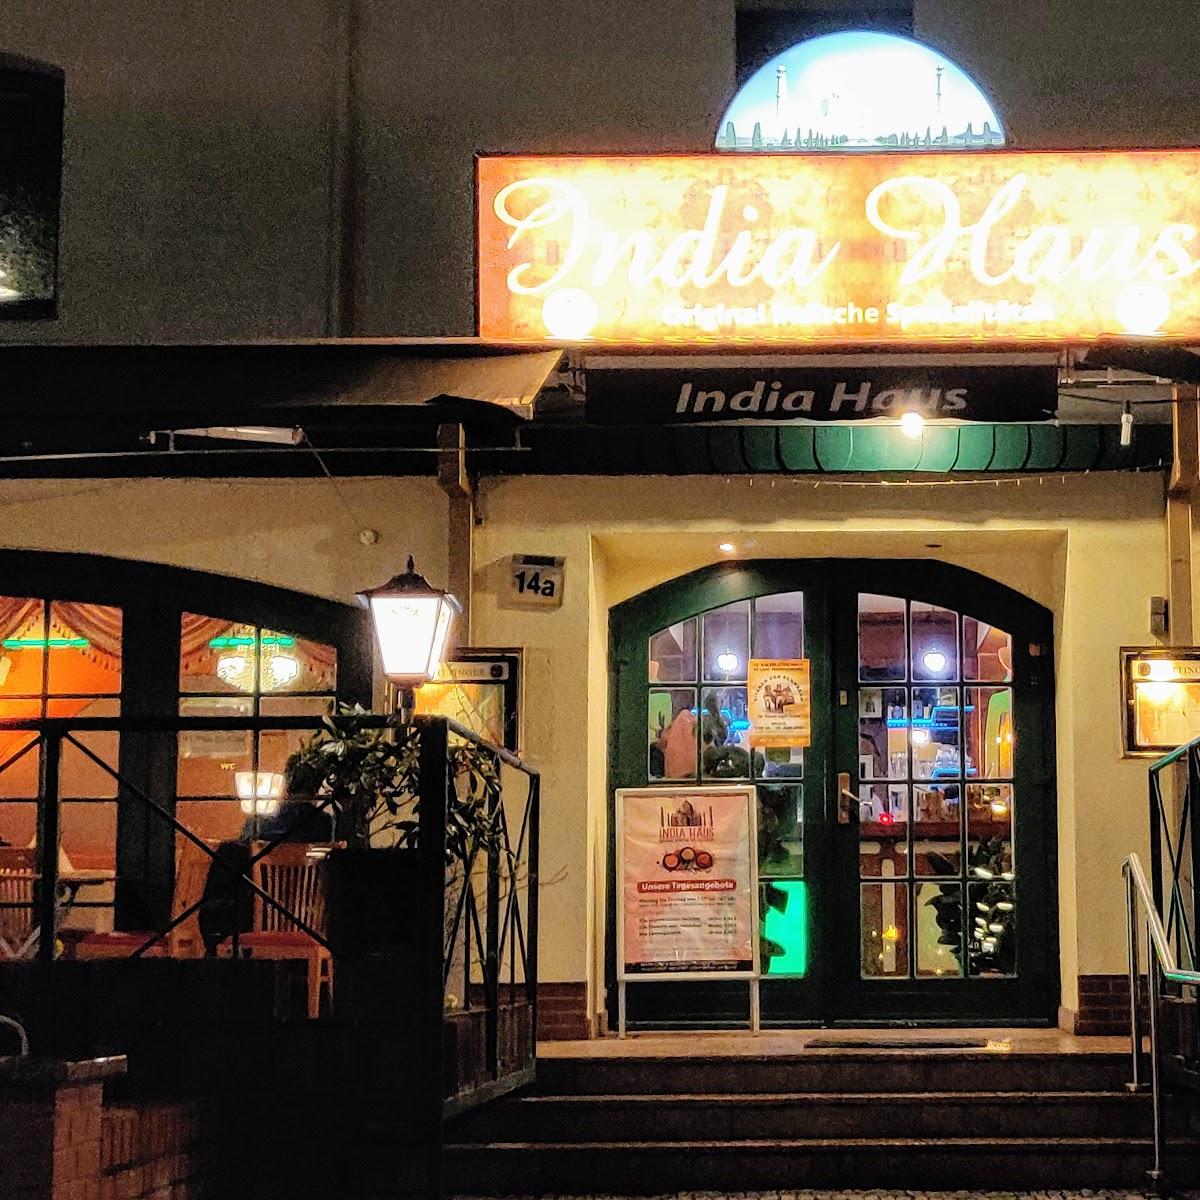 Restaurant "India Haus Wannsee" in Berlin